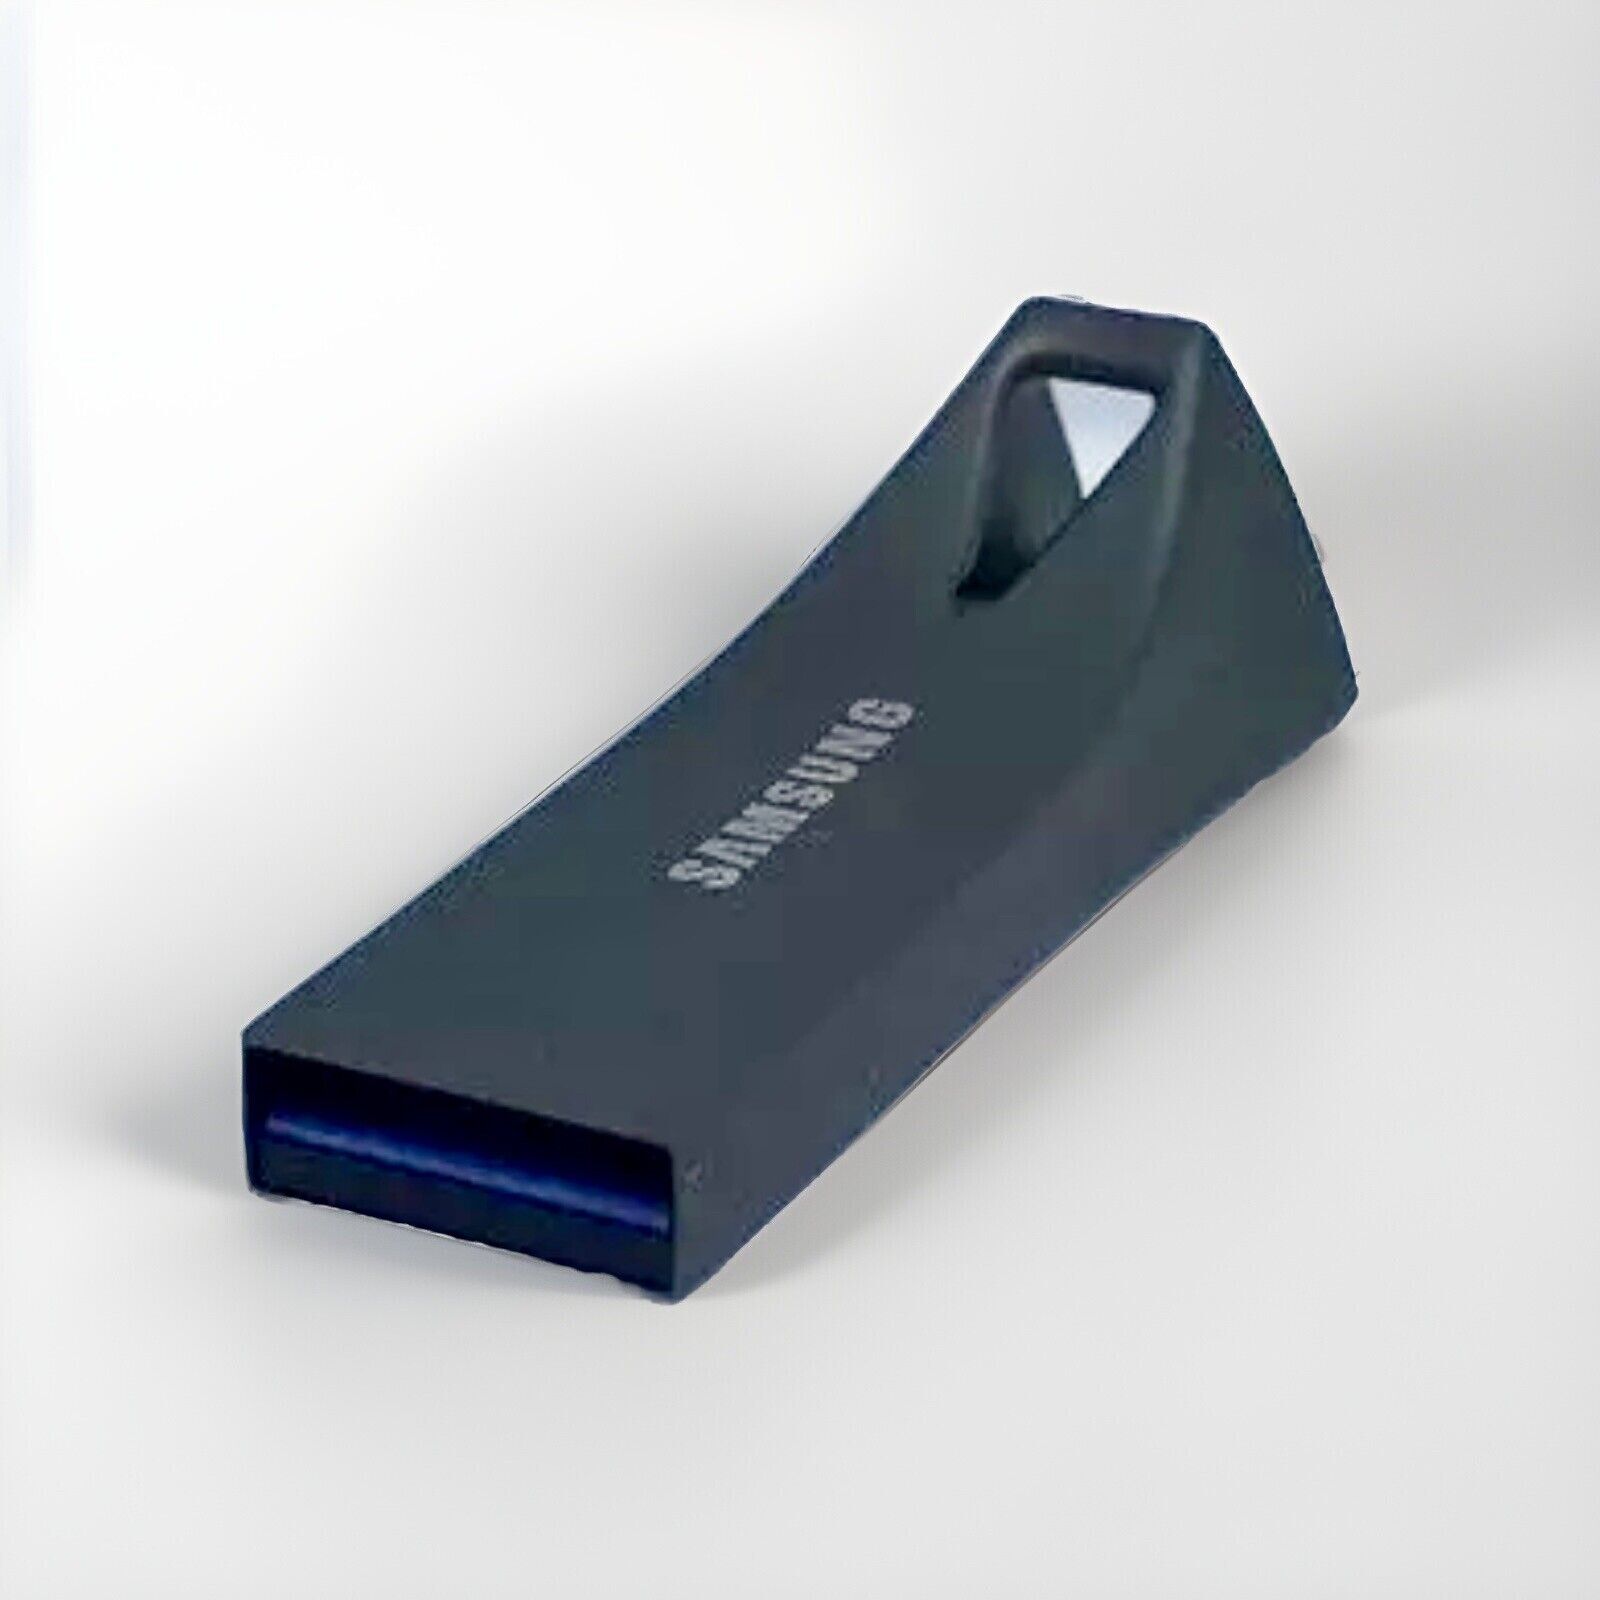 Samsung 256GB BAR Plus USB 3.1 Flash Drive - Titan Gray MUF-256BE4/AM